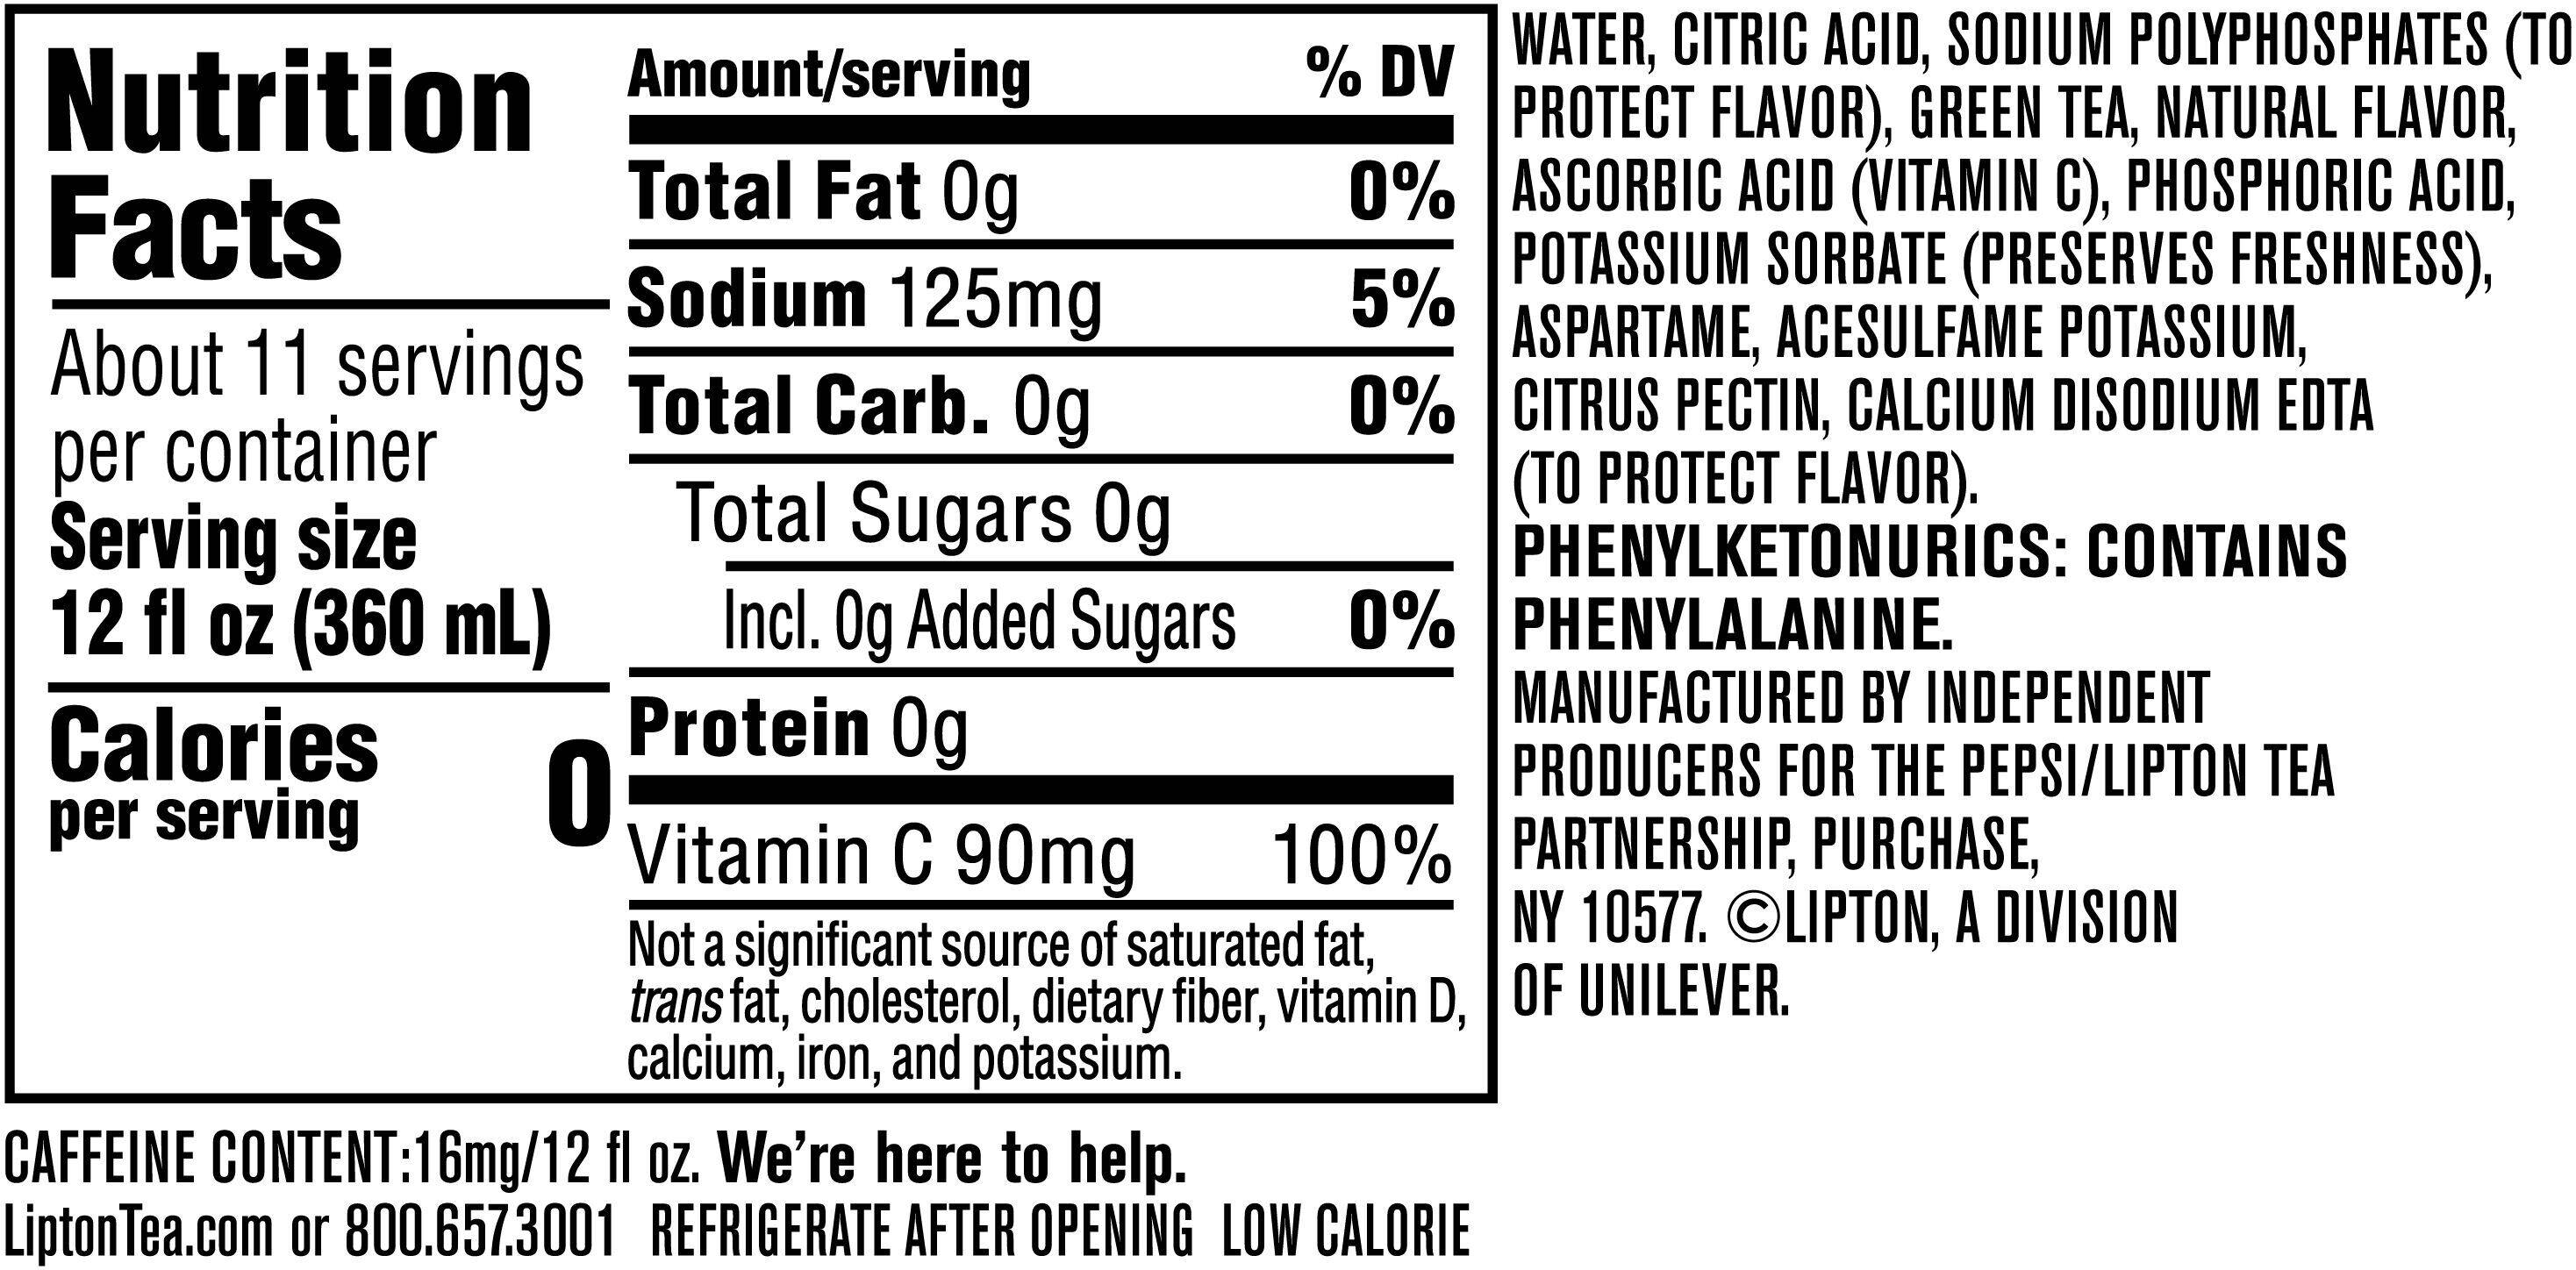 Image describing nutrition information for product Diet Lipton Green Tea Citrus